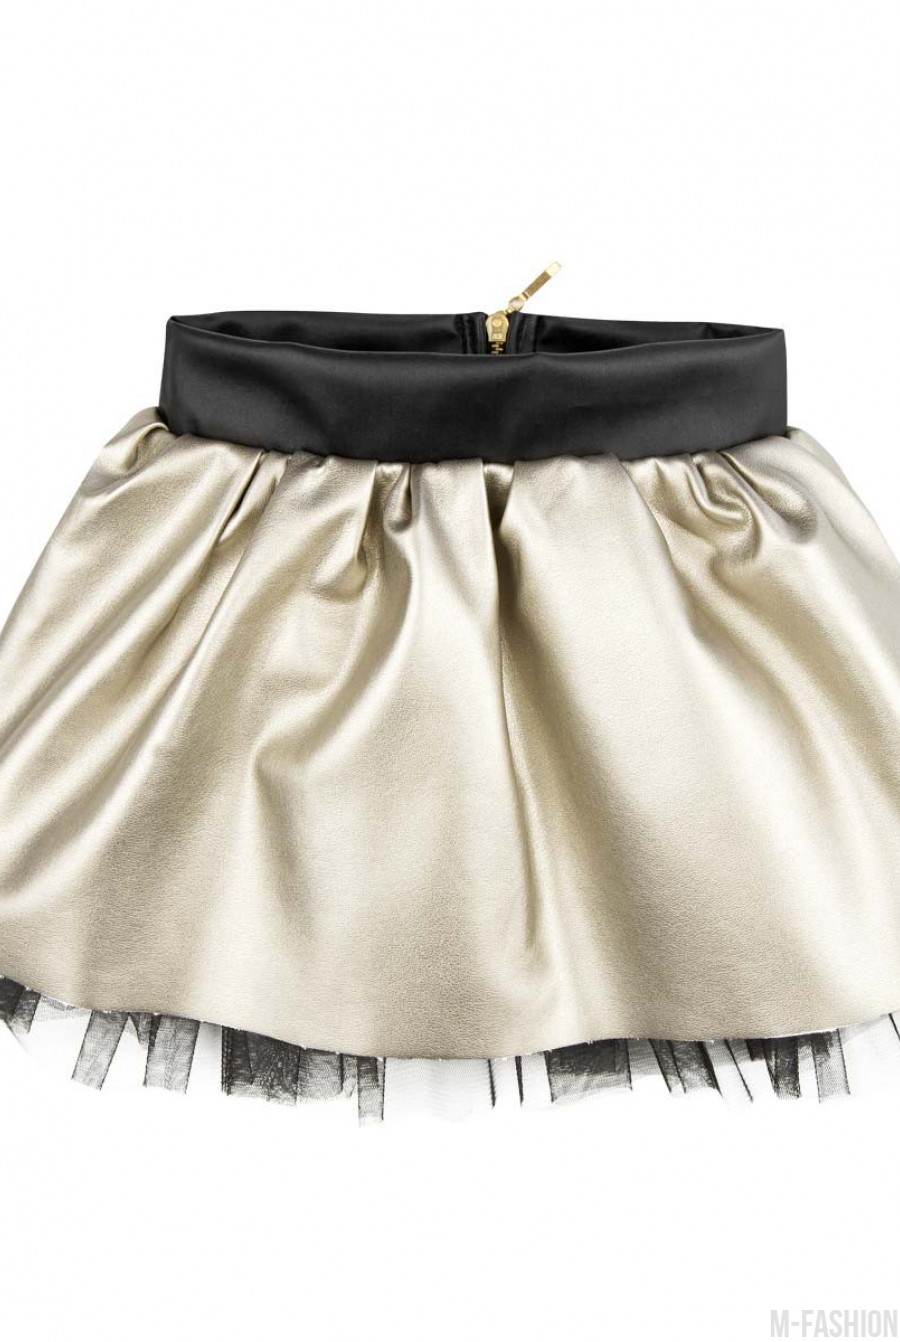 Золотистая юбка-колокол на молнии из эко-кожи - Фото 1